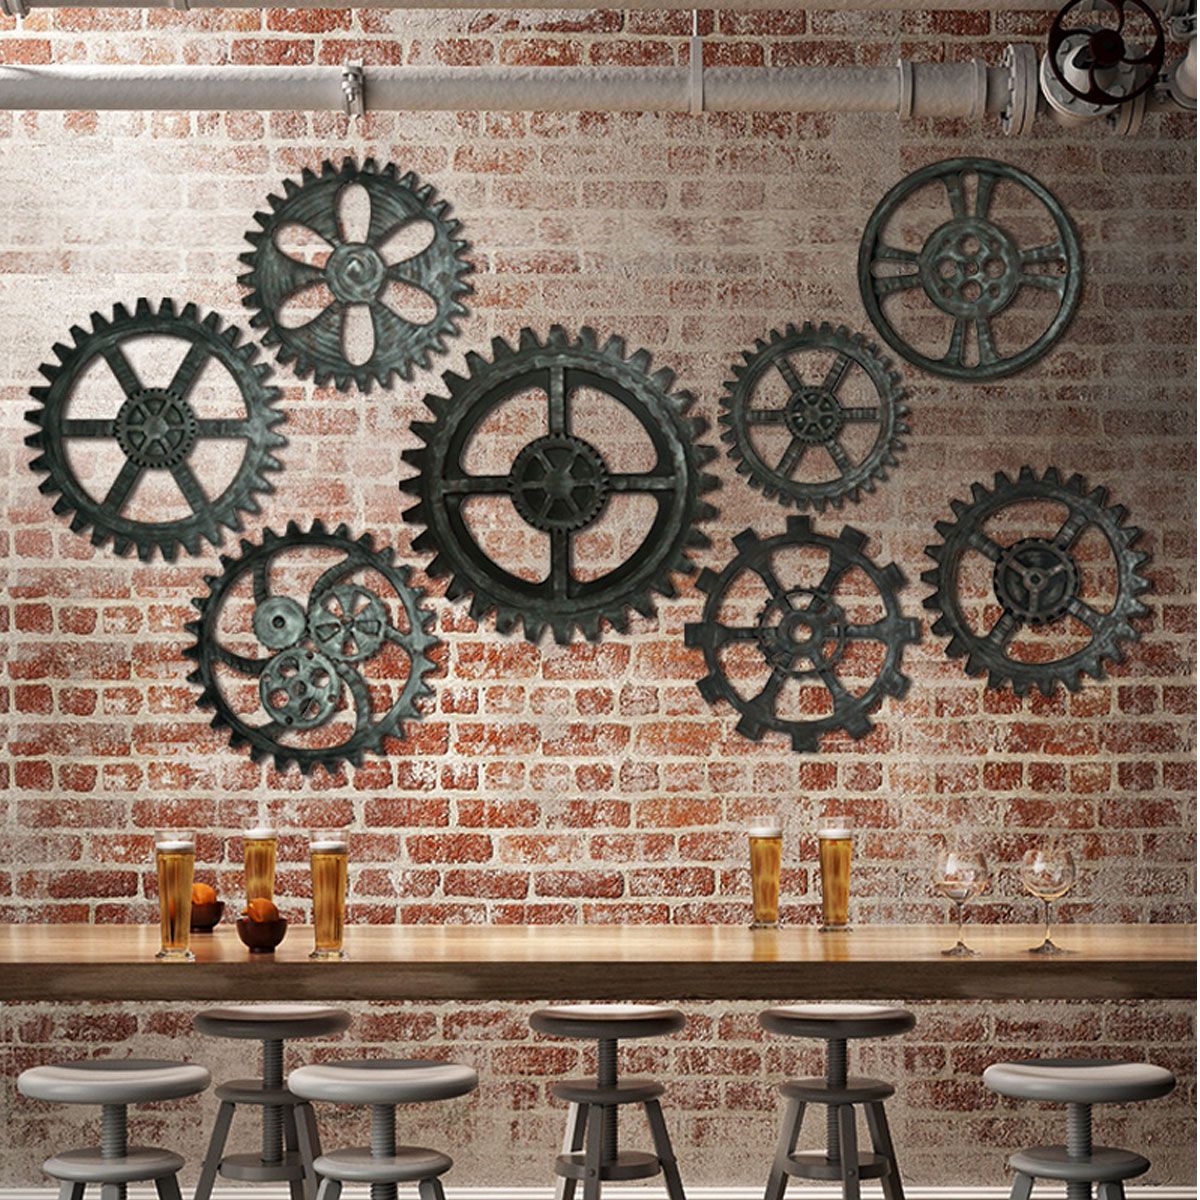 42cm-Industrial-Wood-Wooden-Gear-Vintage-Retro-Art-Bar-Cafe-Wall-Hanging-Decoration-1237790